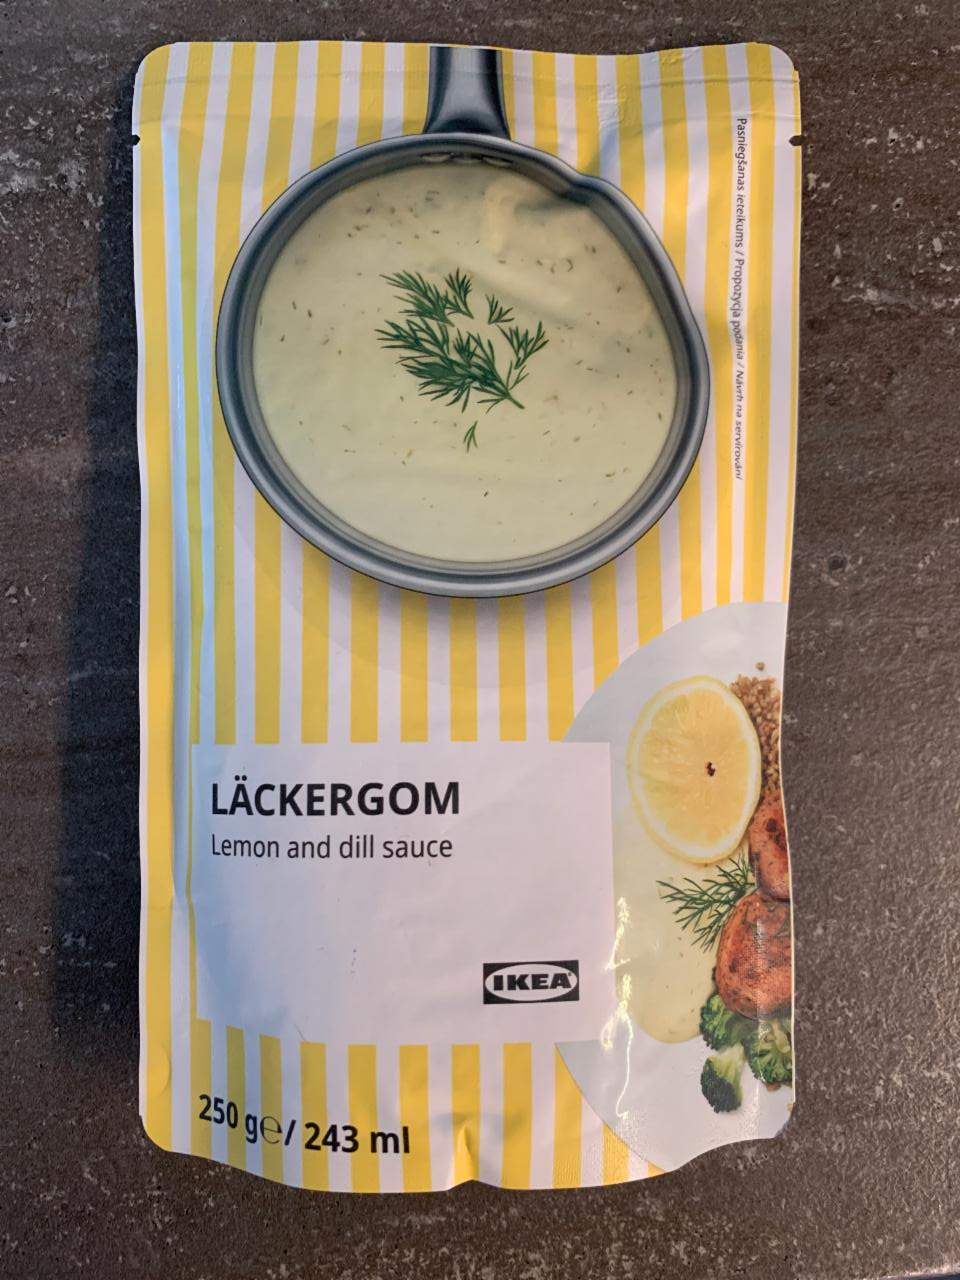 Zdjęcia - LÄCKERGOM Lemon and dill sauce Ikea